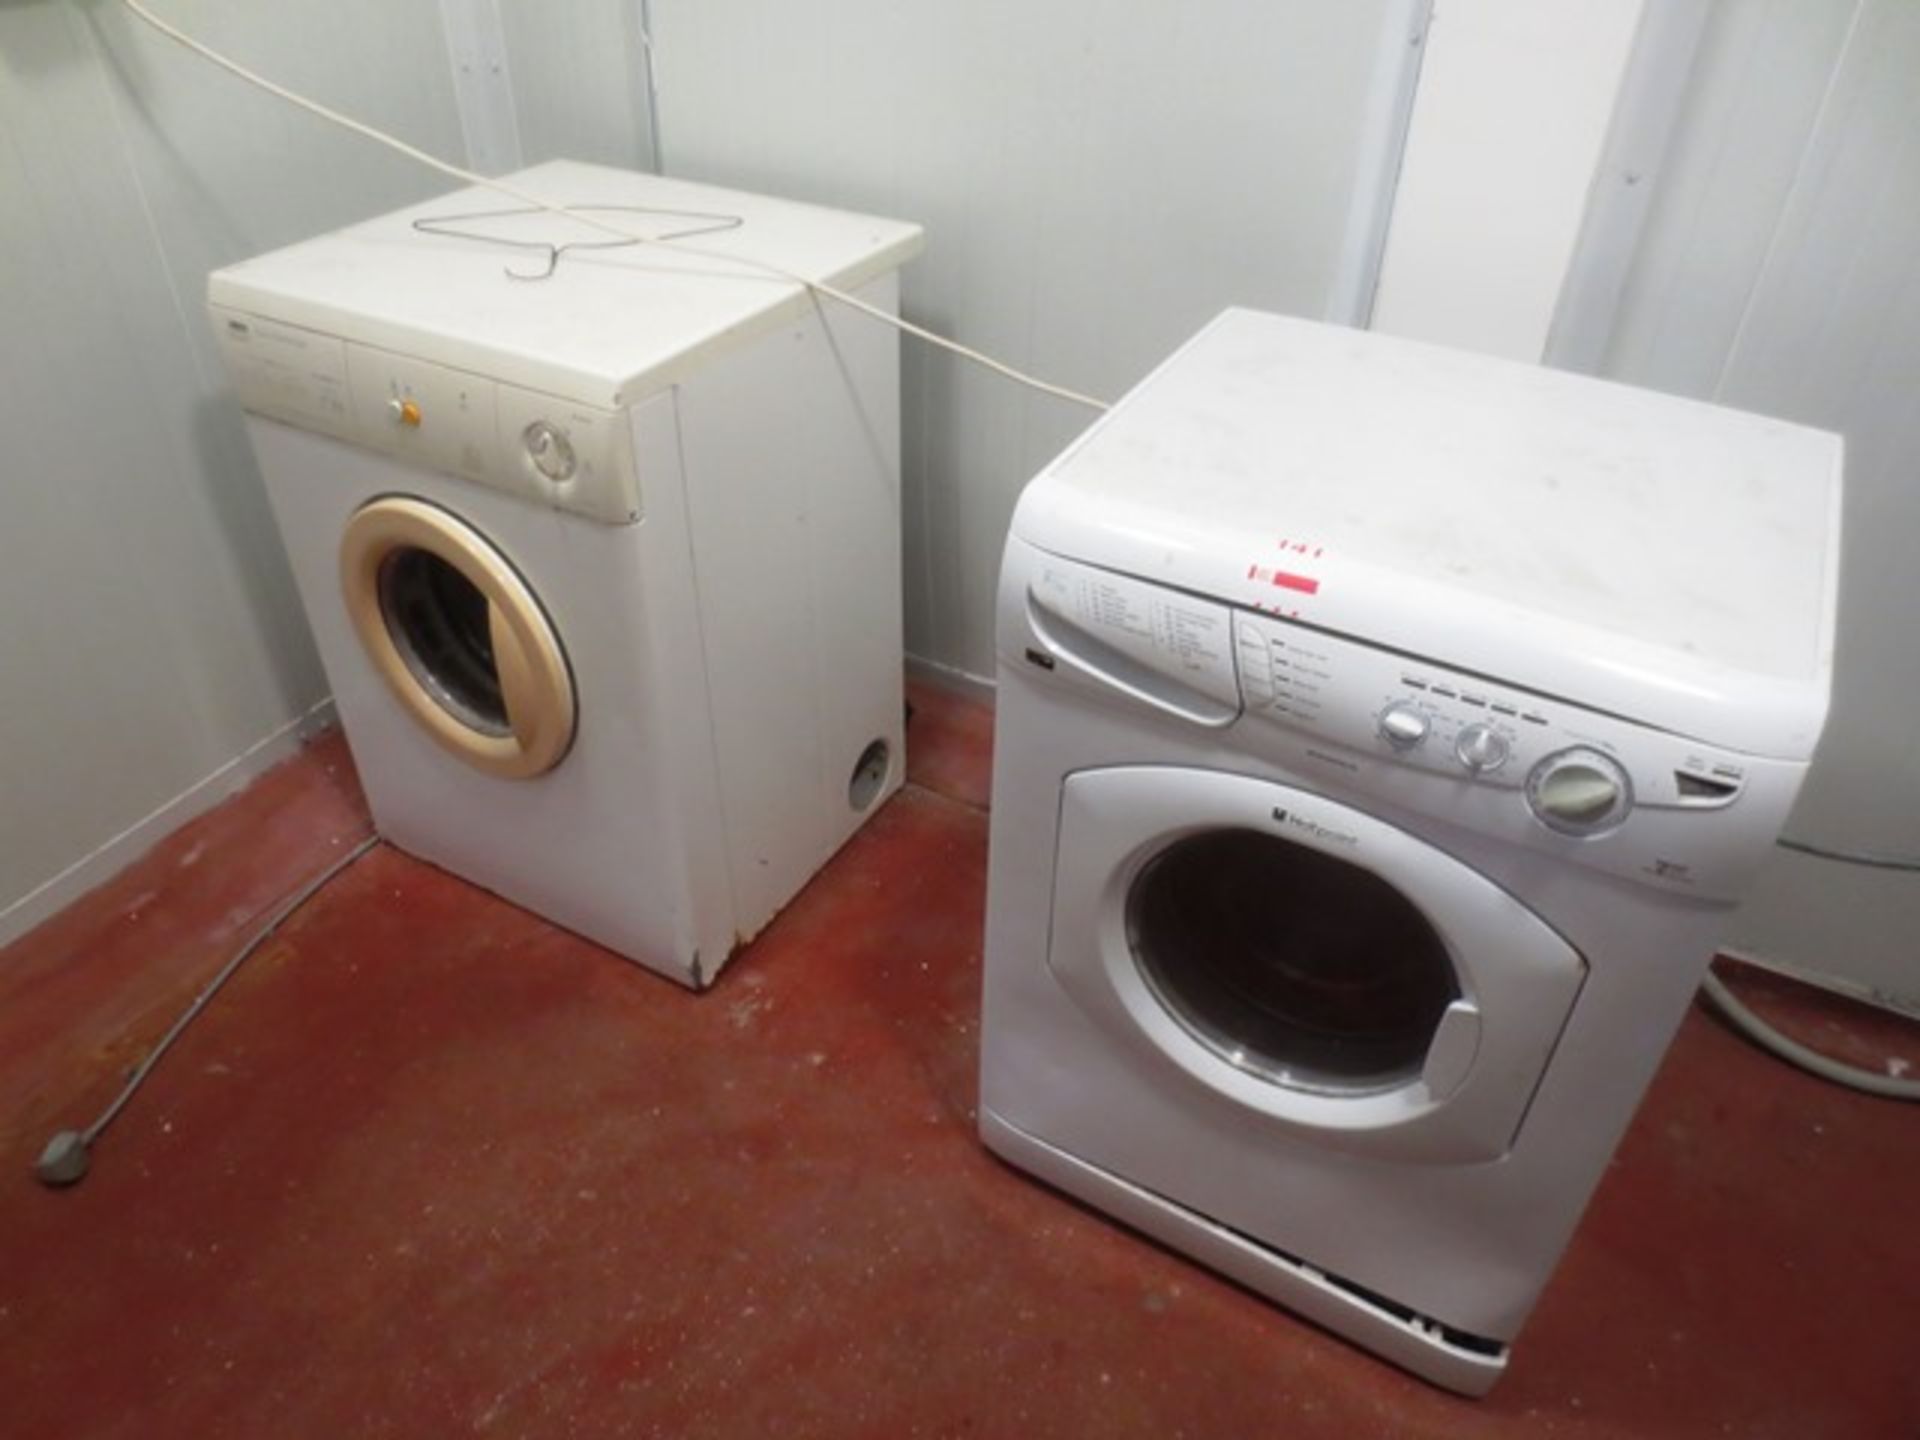 Hotpoint Aquarius WD420 washing machine, and Zanussi TD4112W tumble dryer